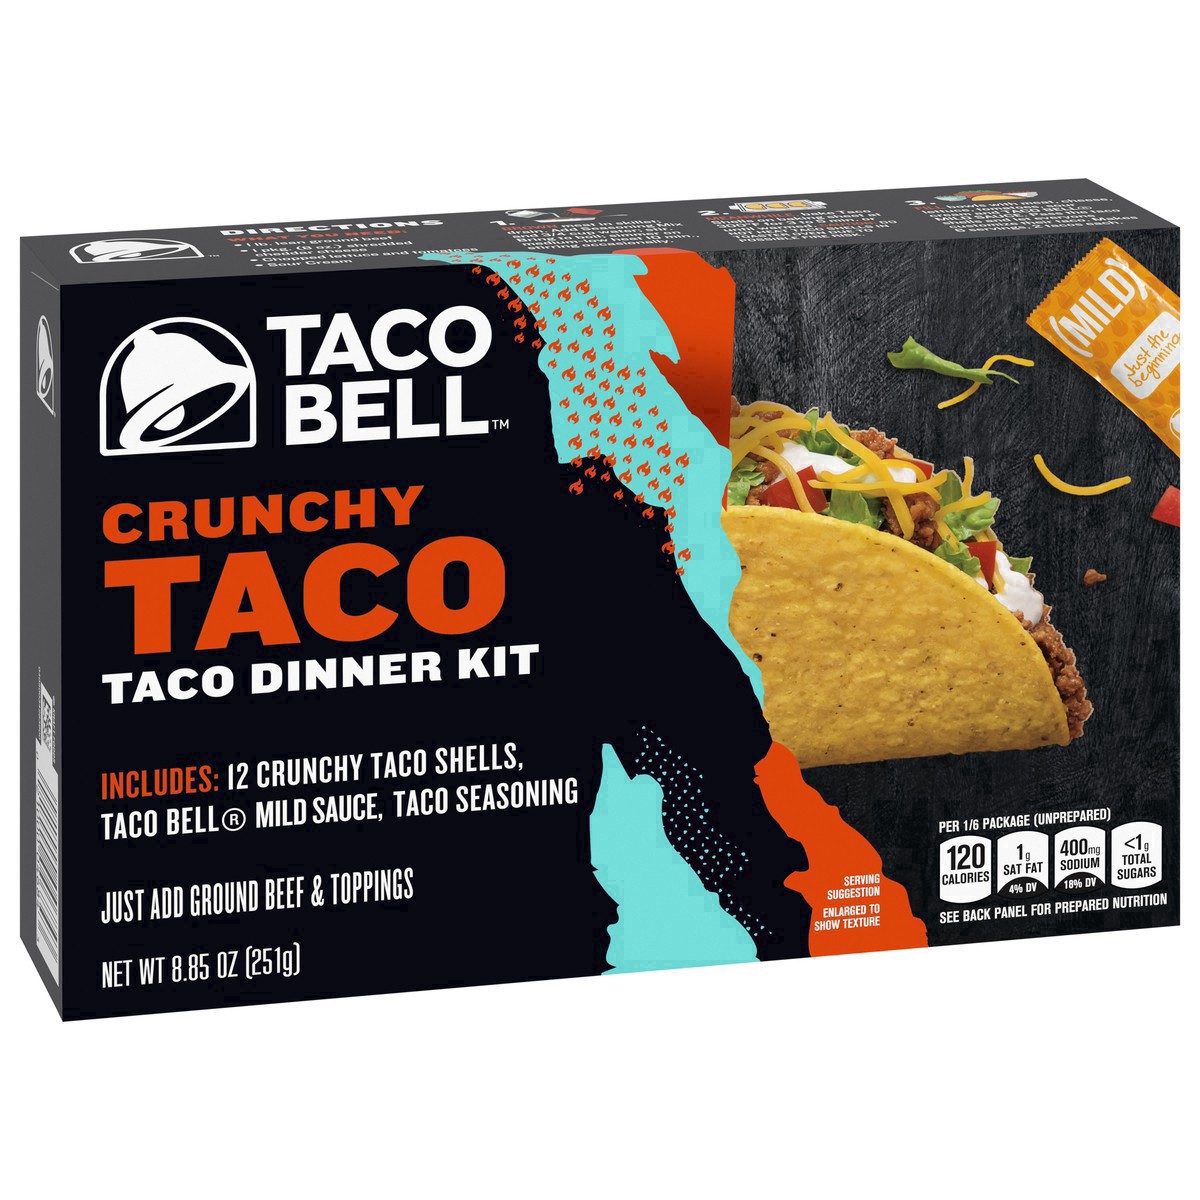 slide 14 of 91, Taco Bell Crunchy Taco Cravings Kit with 12 Crunchy Taco Shells, Taco Bell Mild Sauce & Seasoning, 8.85 oz Box, 1 ct